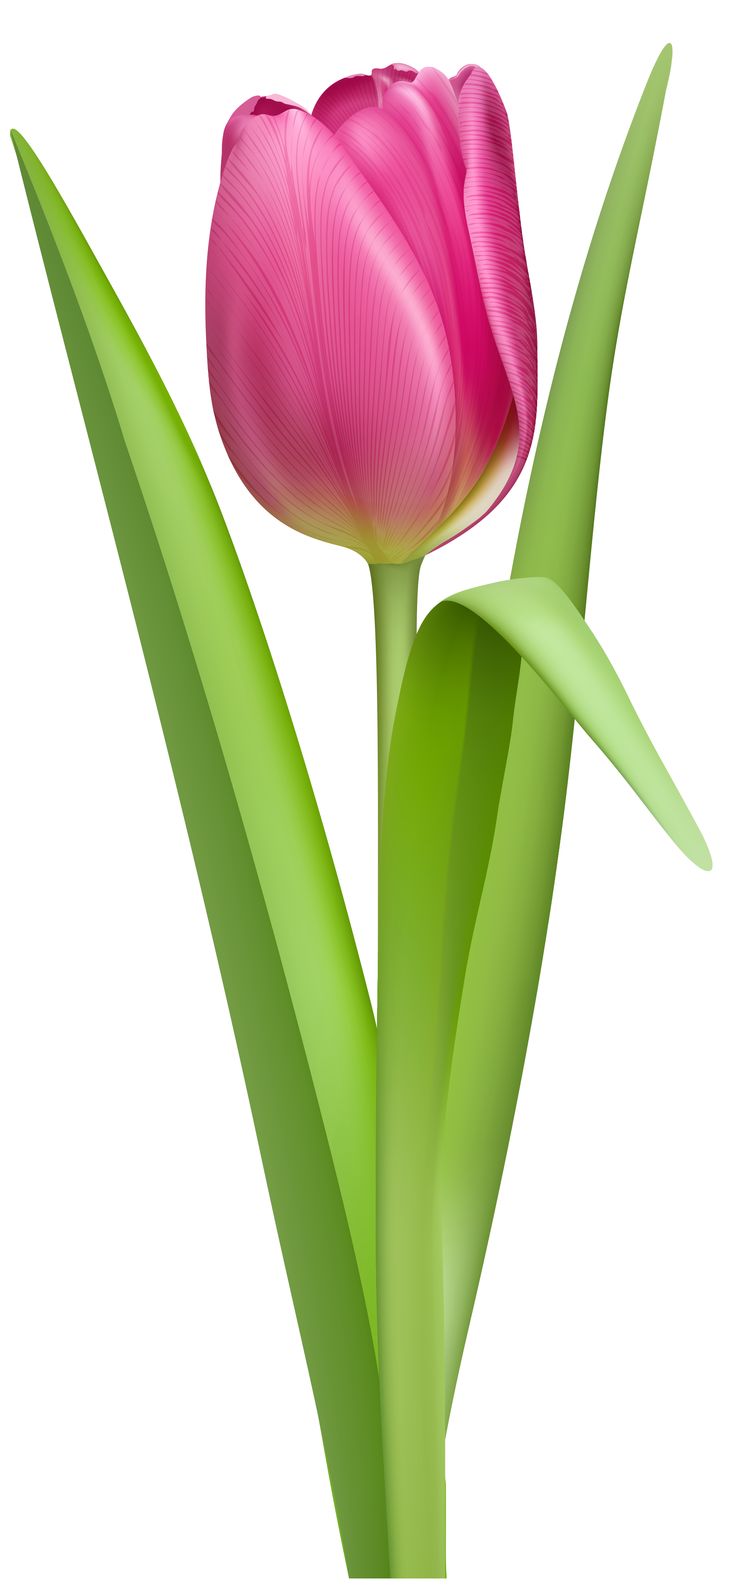 Tulip clipart transparent background